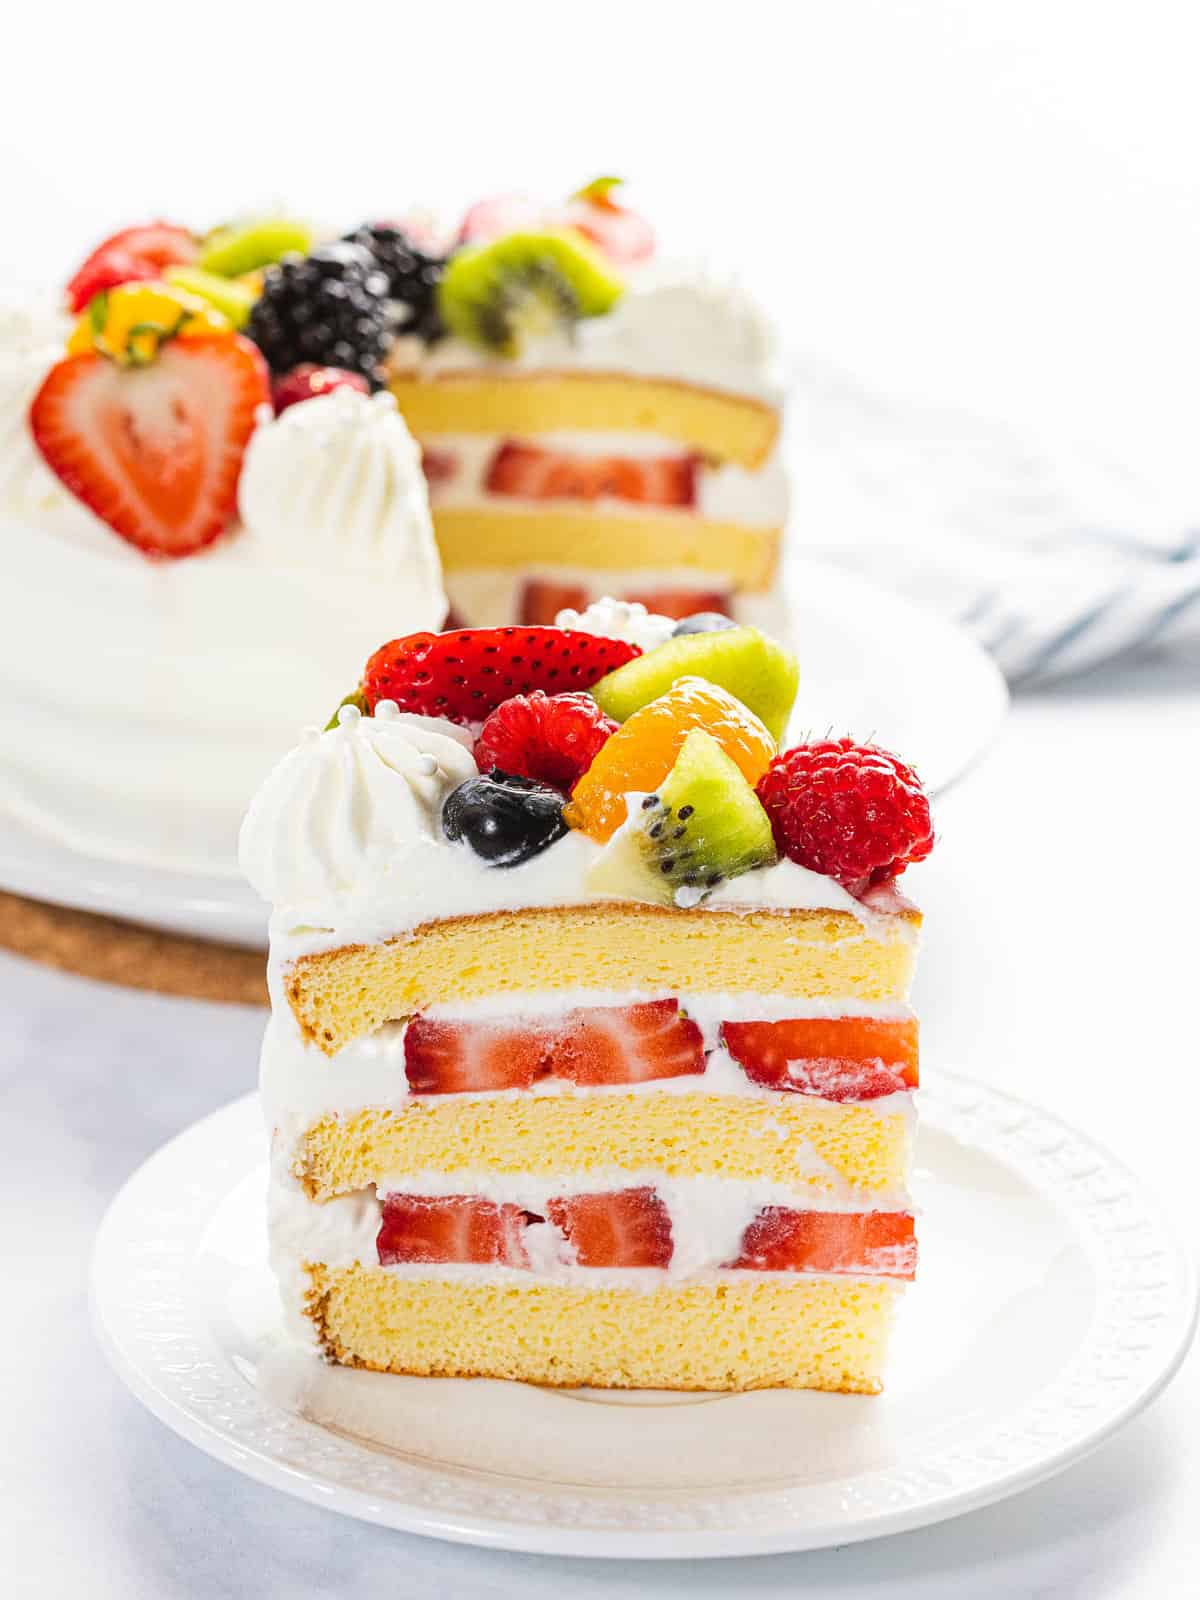 Fresh fruit cake layered with sponge cake, whipped cream, and berries.